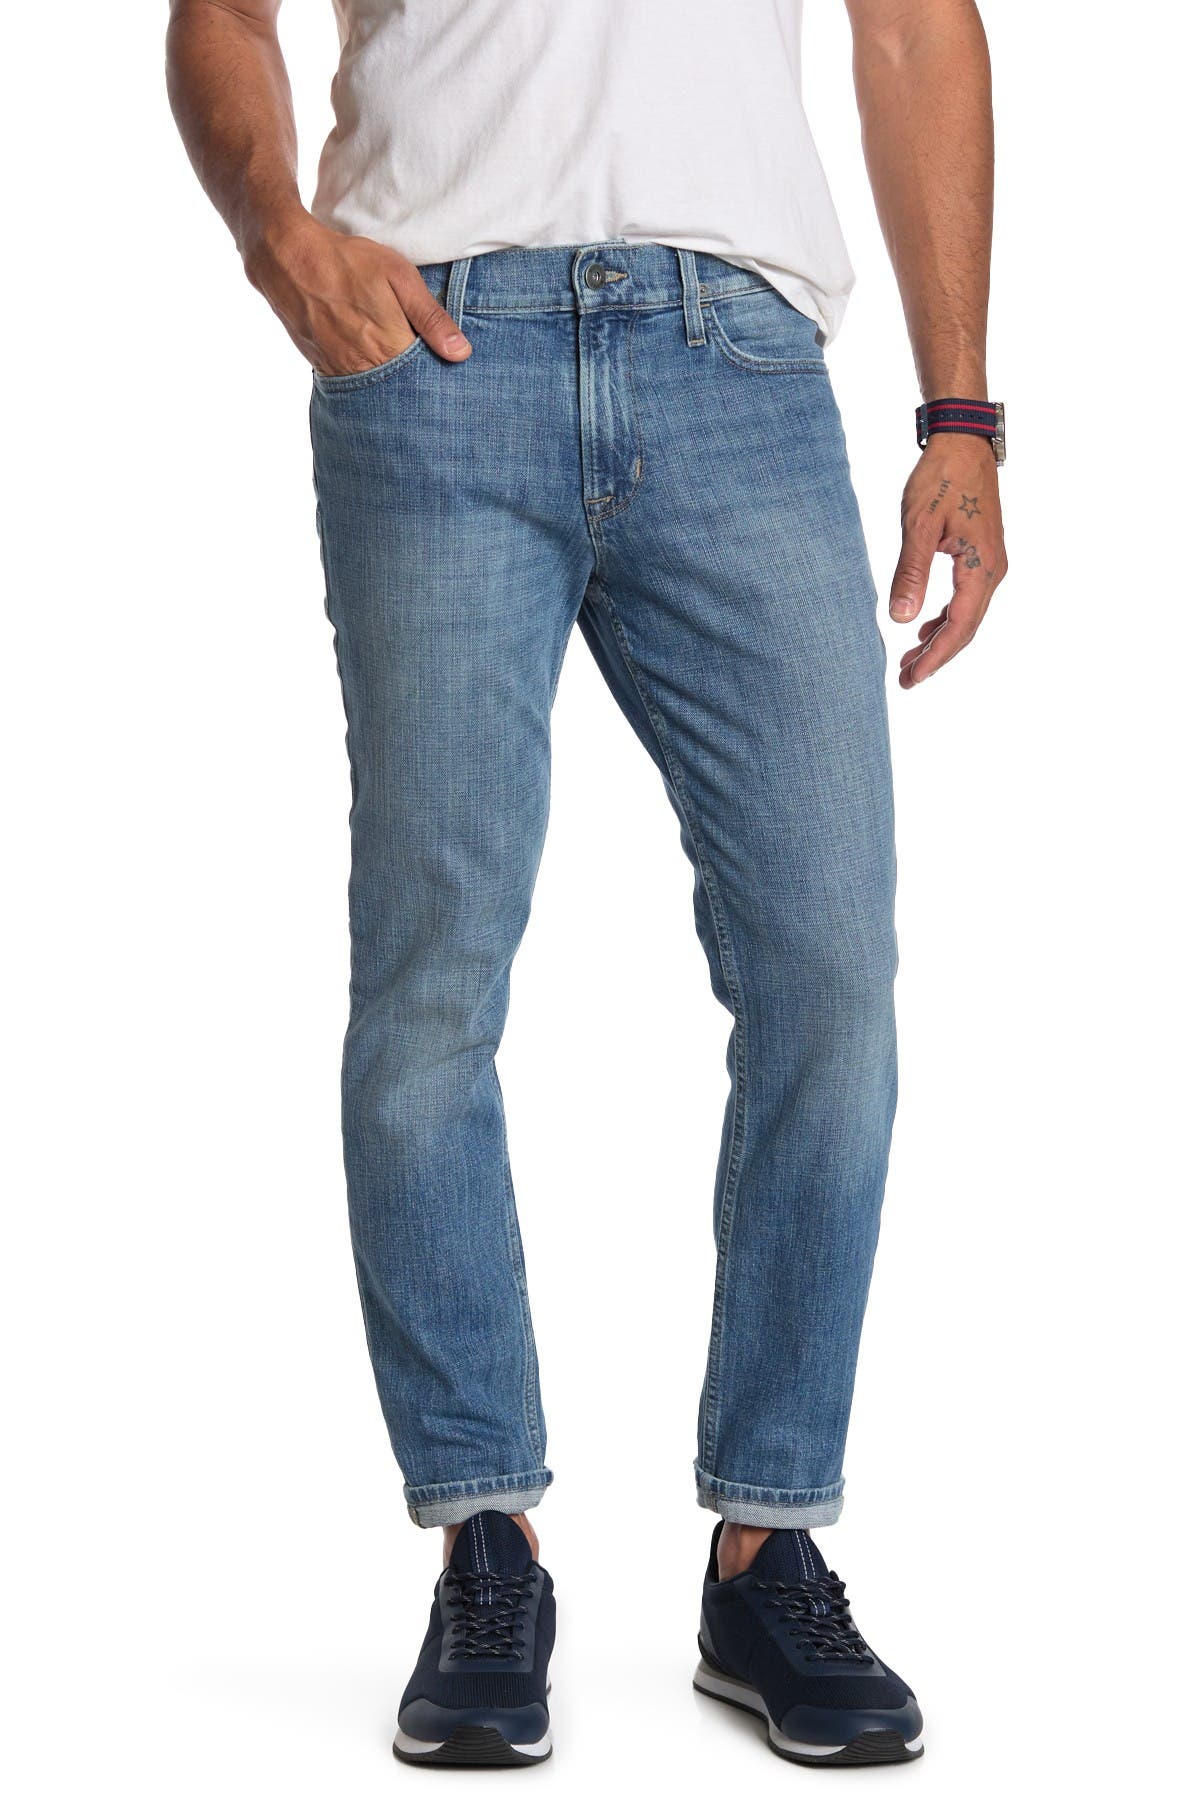 nordstrom mens skinny jeans